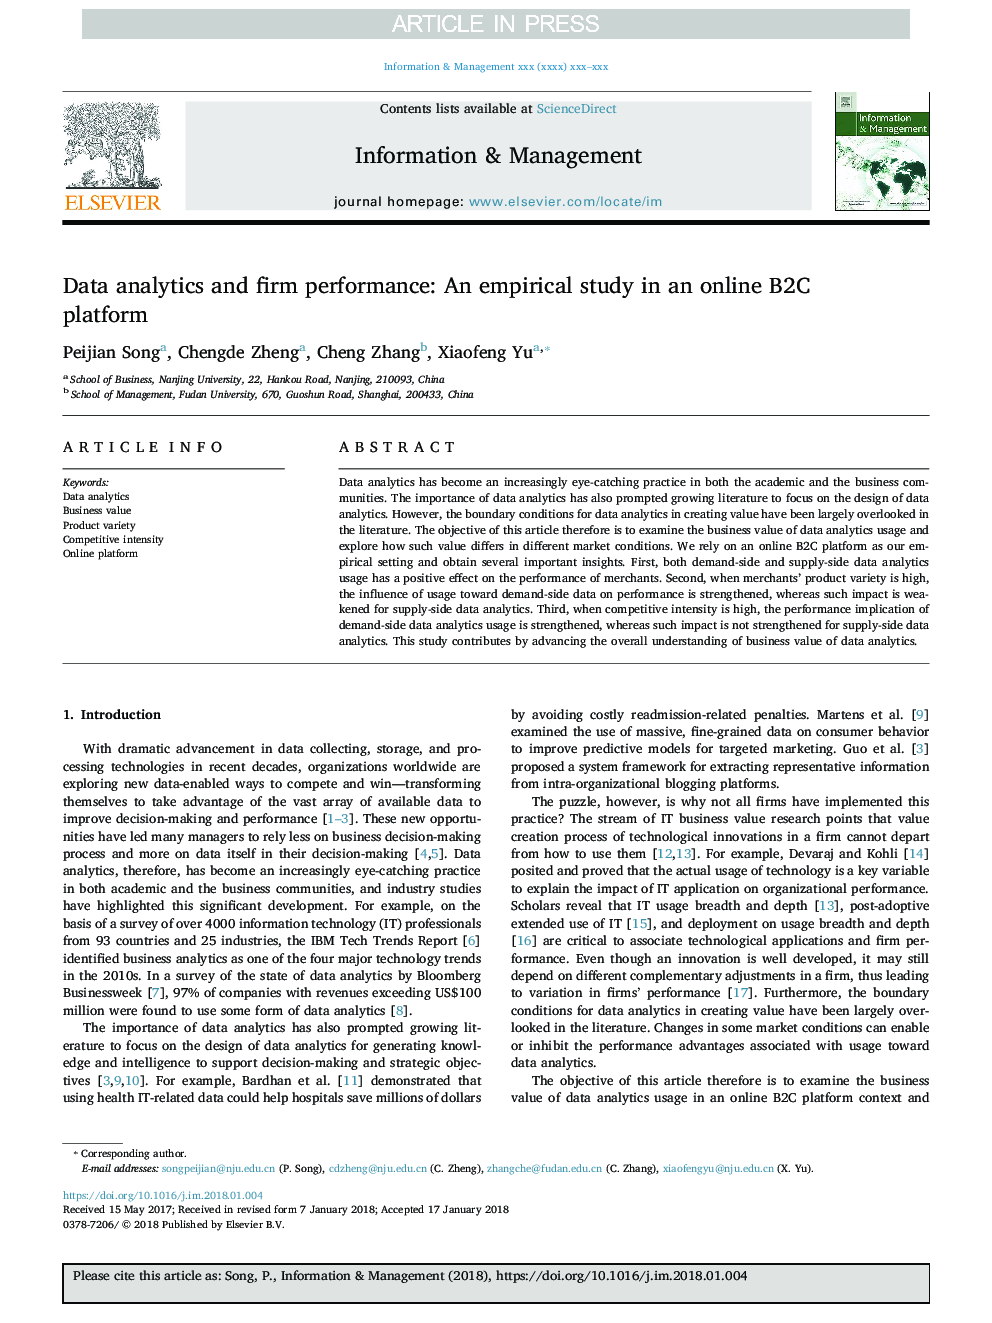 Data analytics and firm performance: An empirical study in an online B2C platform